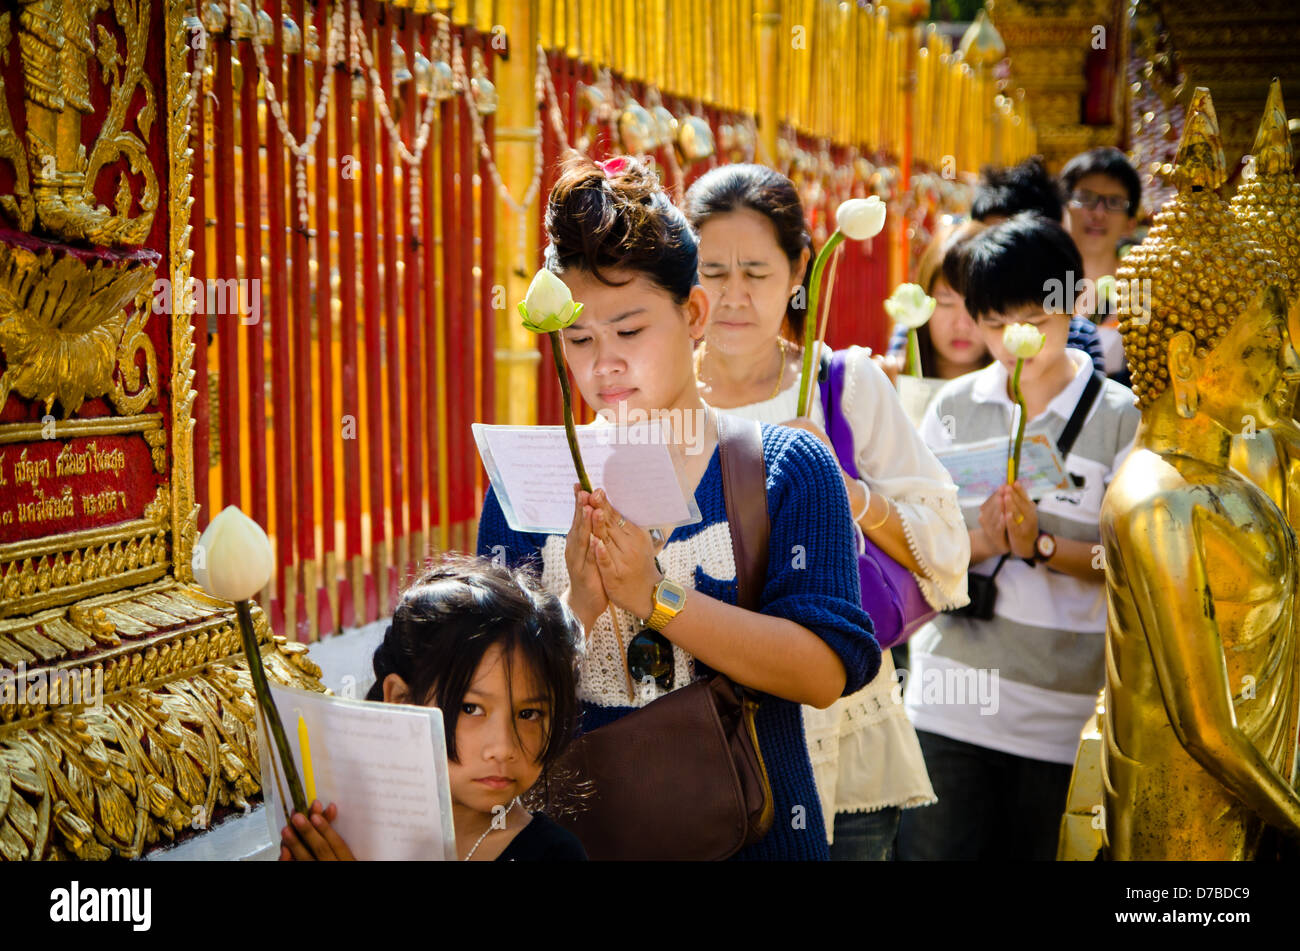 PHRATHAT Doi Suthep Temple, Chang Mai, Tailandia - 2 gennaio 2013: pellegrini visitano il tempio Doi Suthep nel nord della Thailandia. Foto Stock